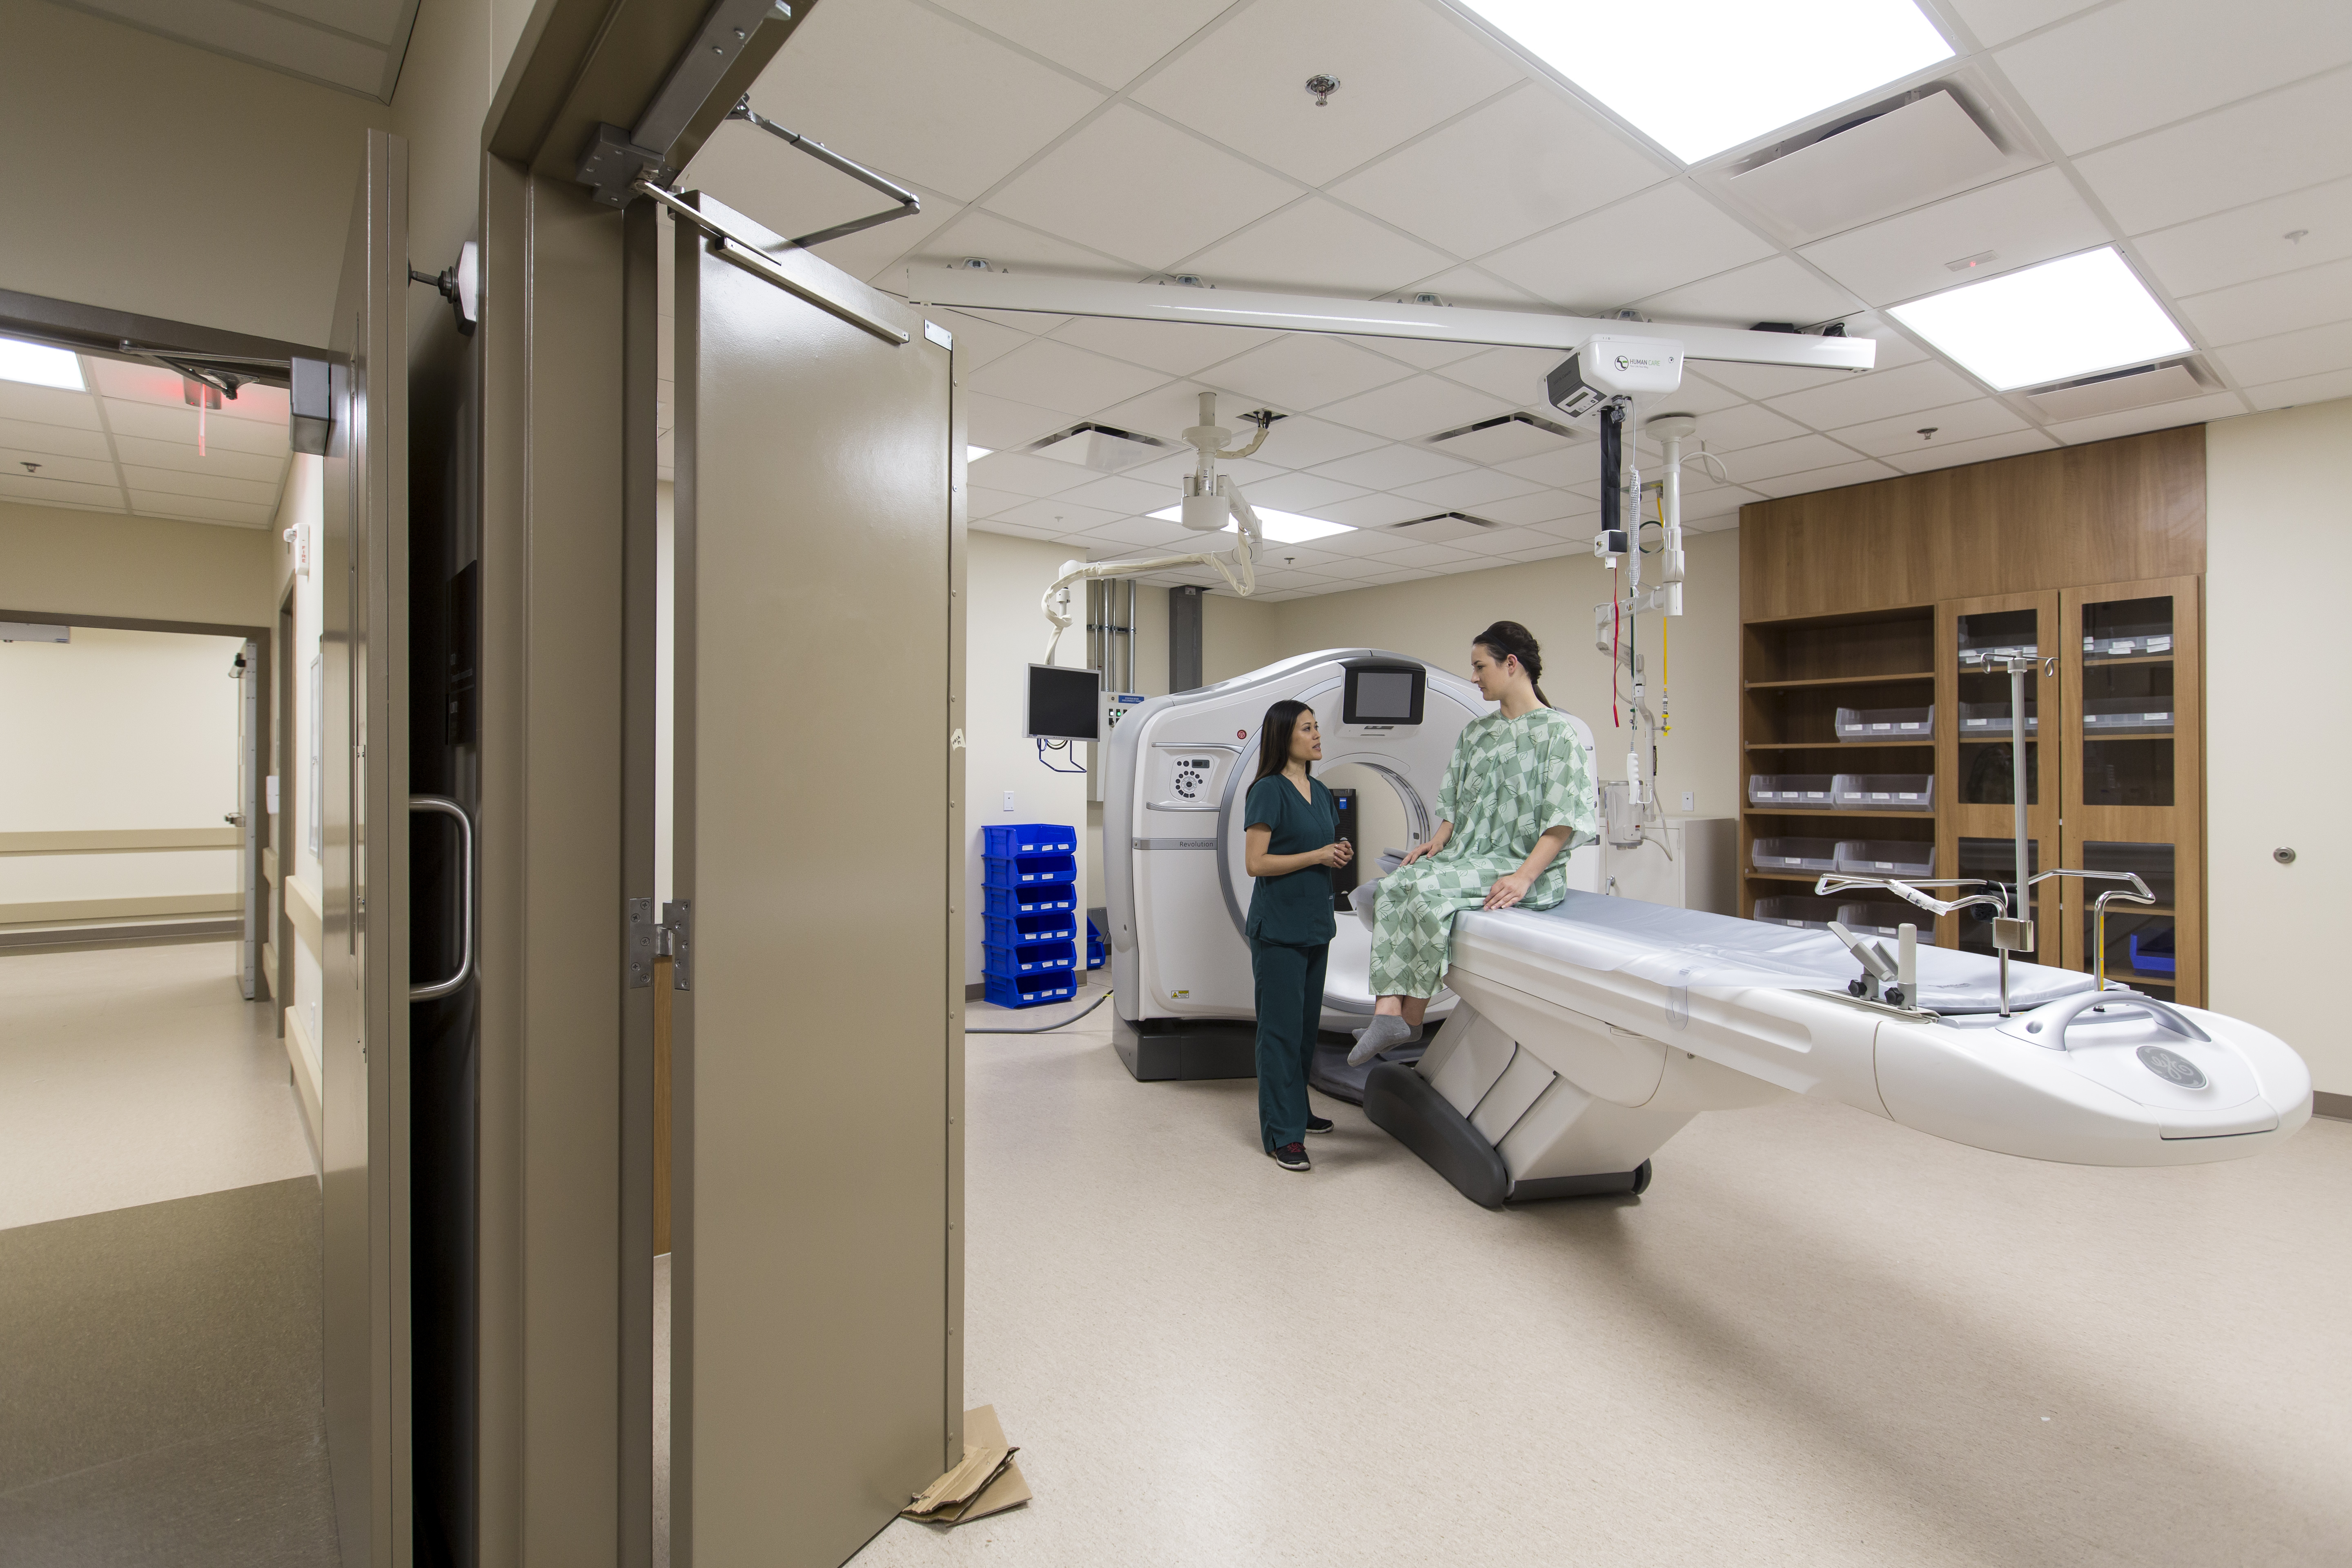 Dell Seton Medical Center case study - healthcare patient care